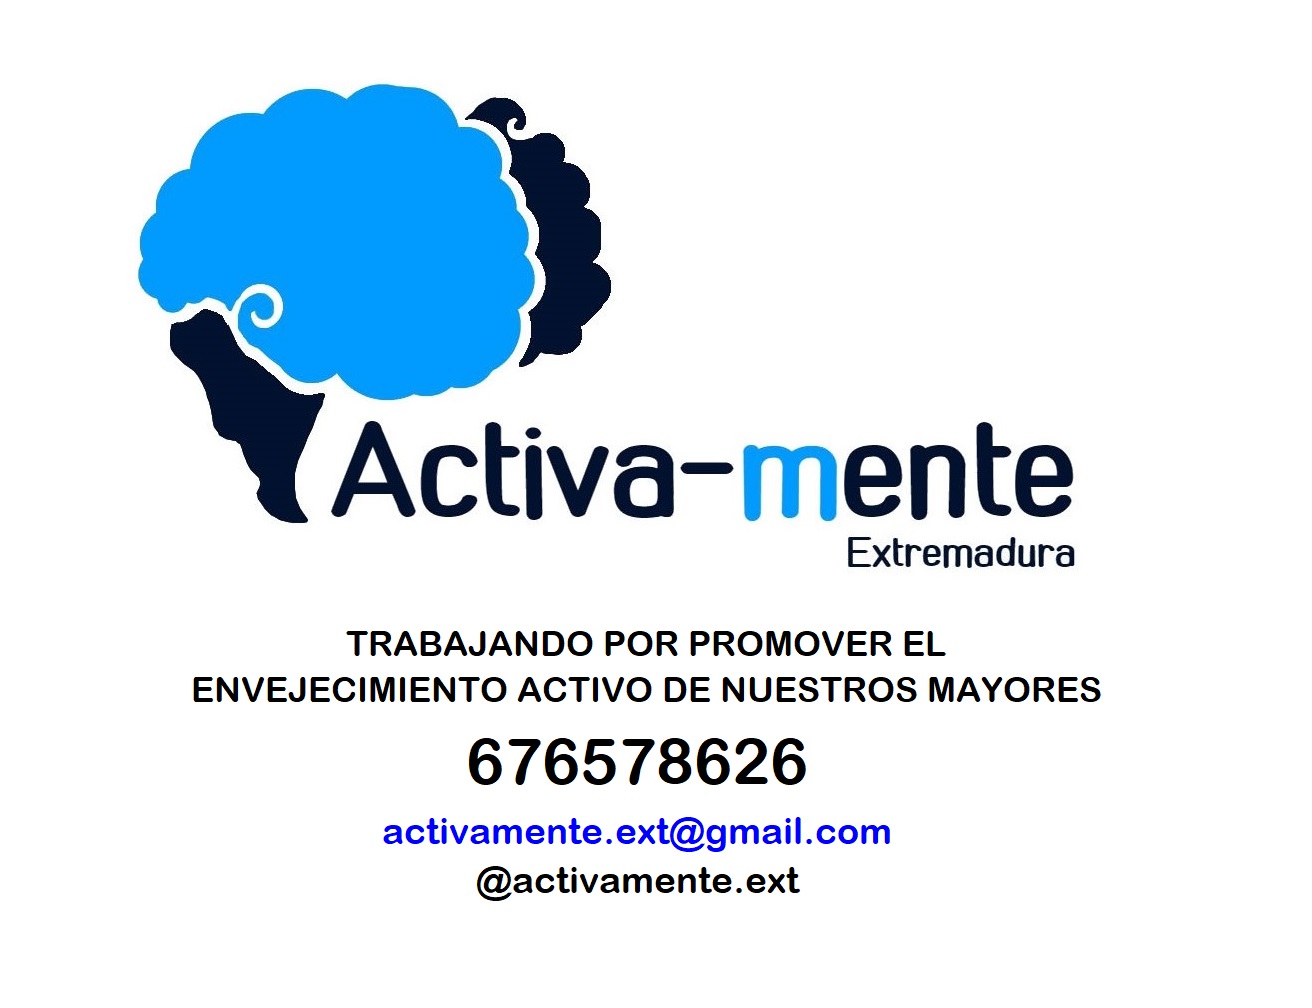 Activa-mente Extremadura